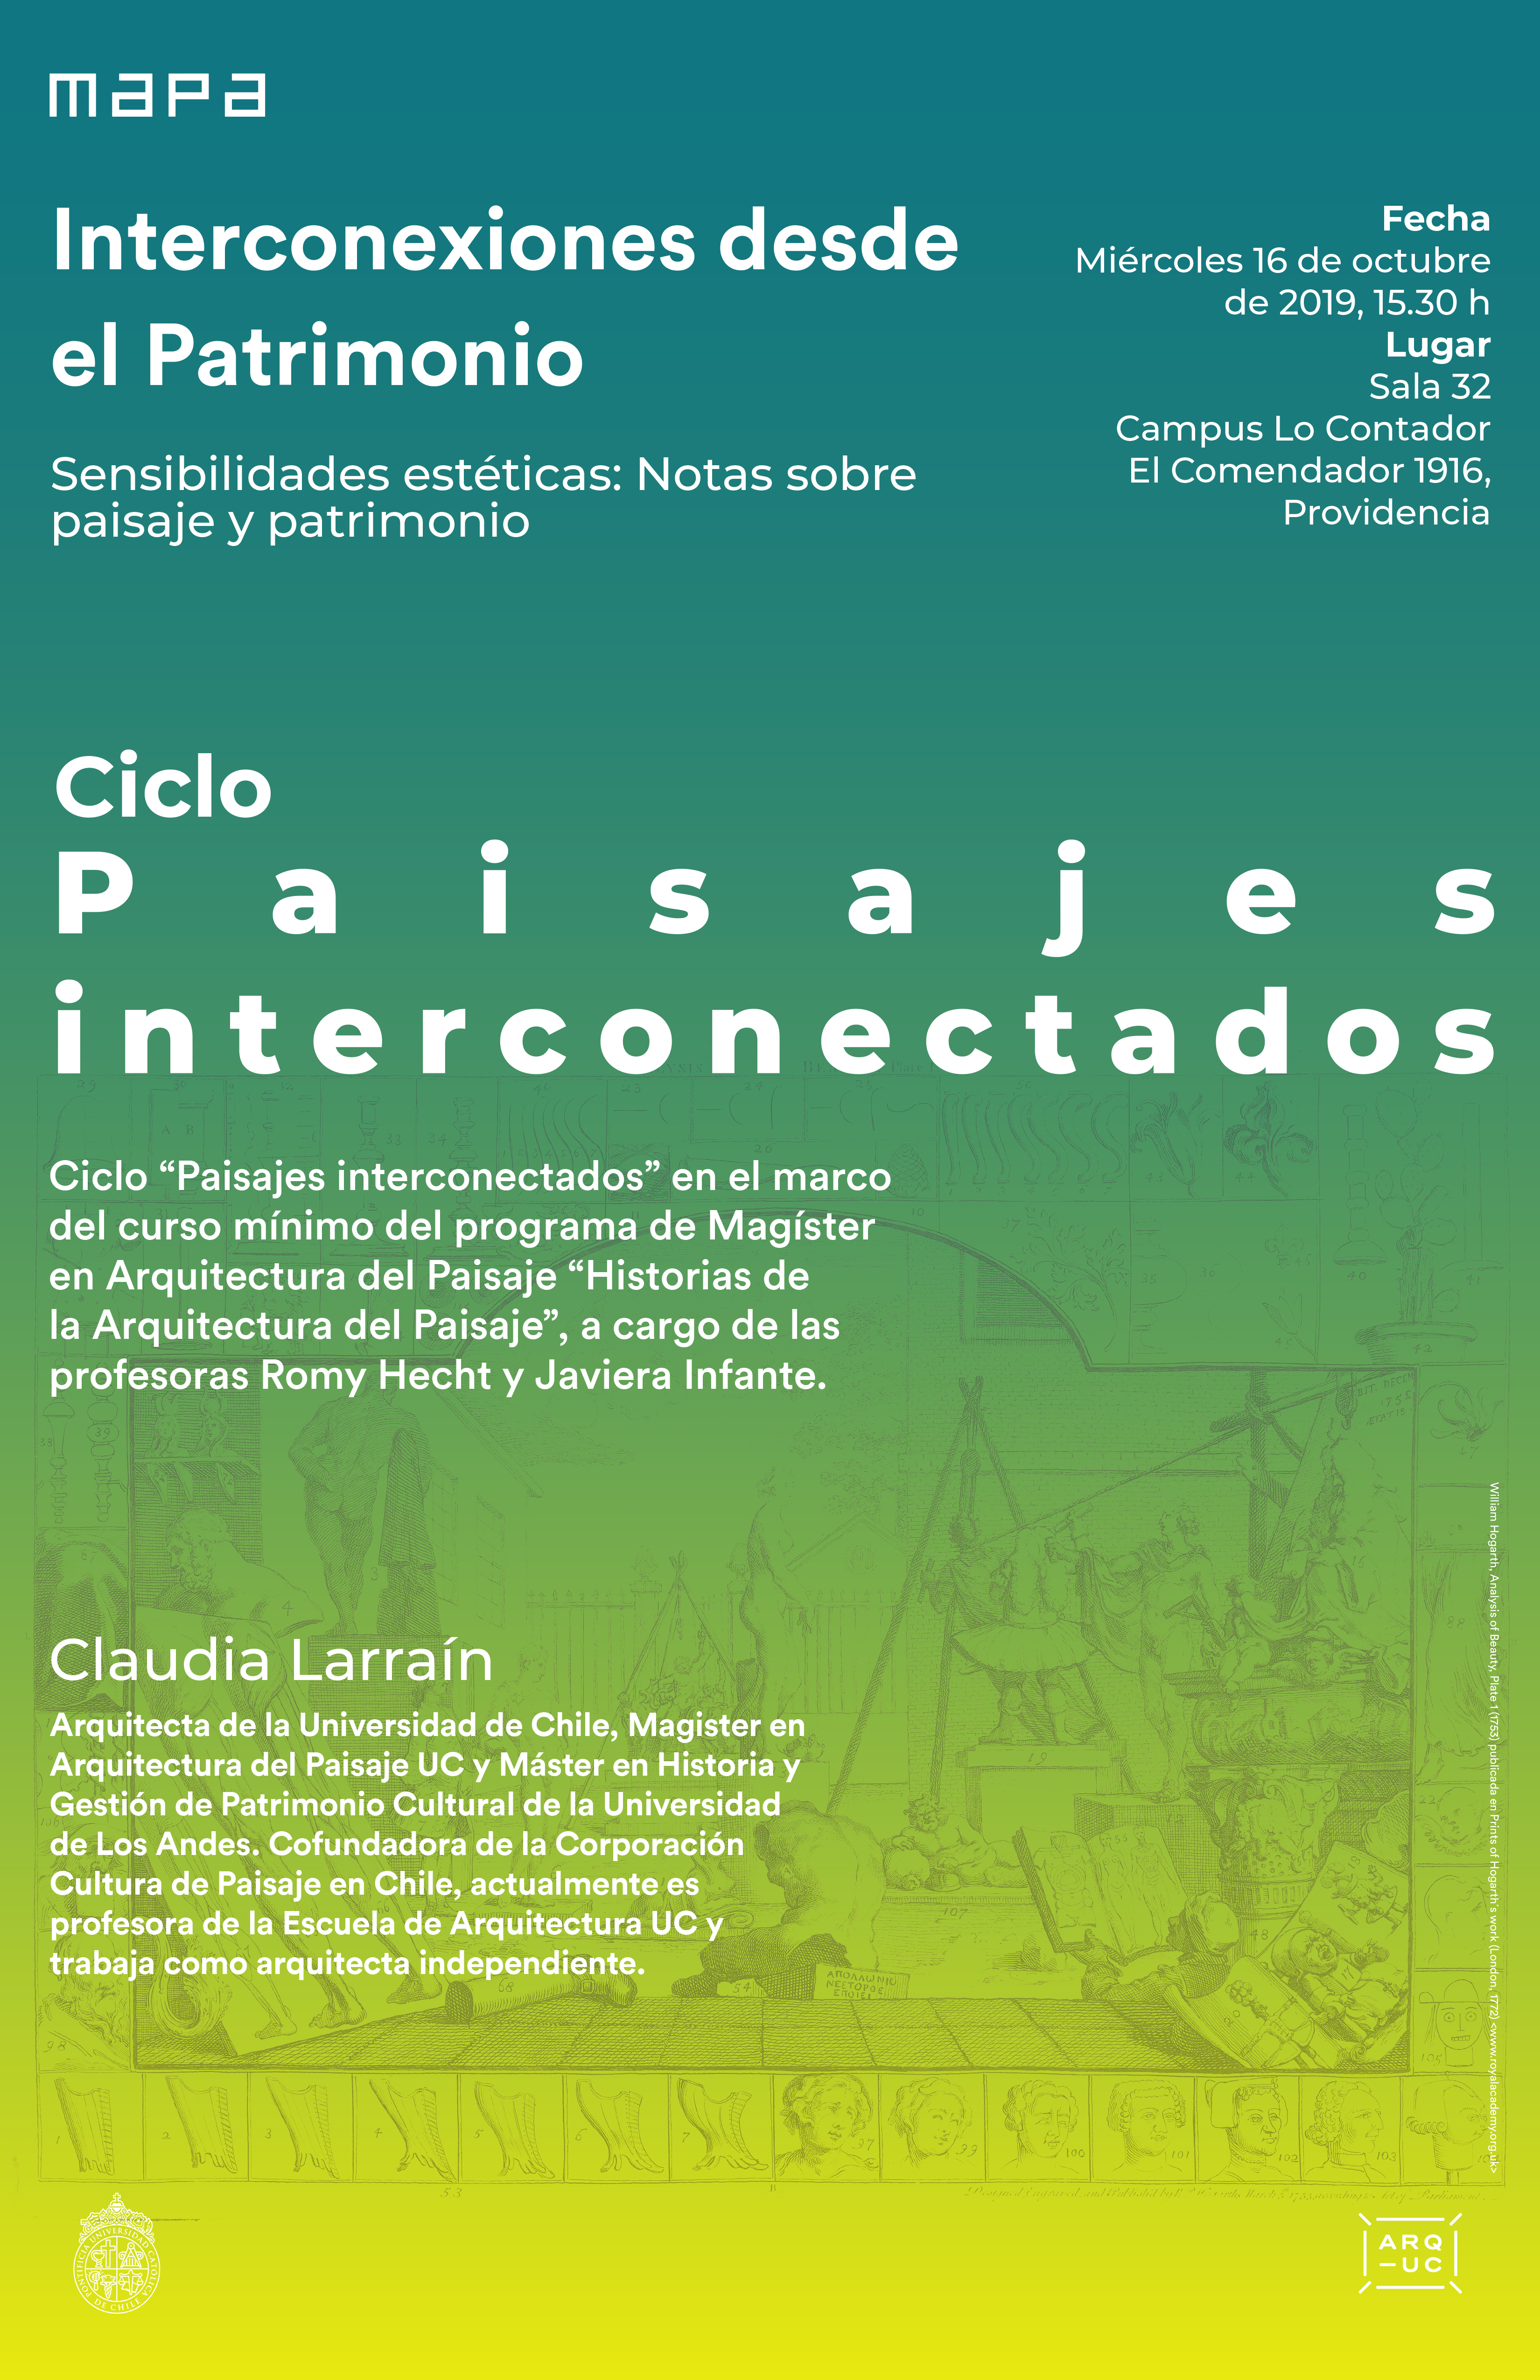 20191016_Ciclo_Paisajes_interconectados_Claudia_Larrain_afiche.jpg